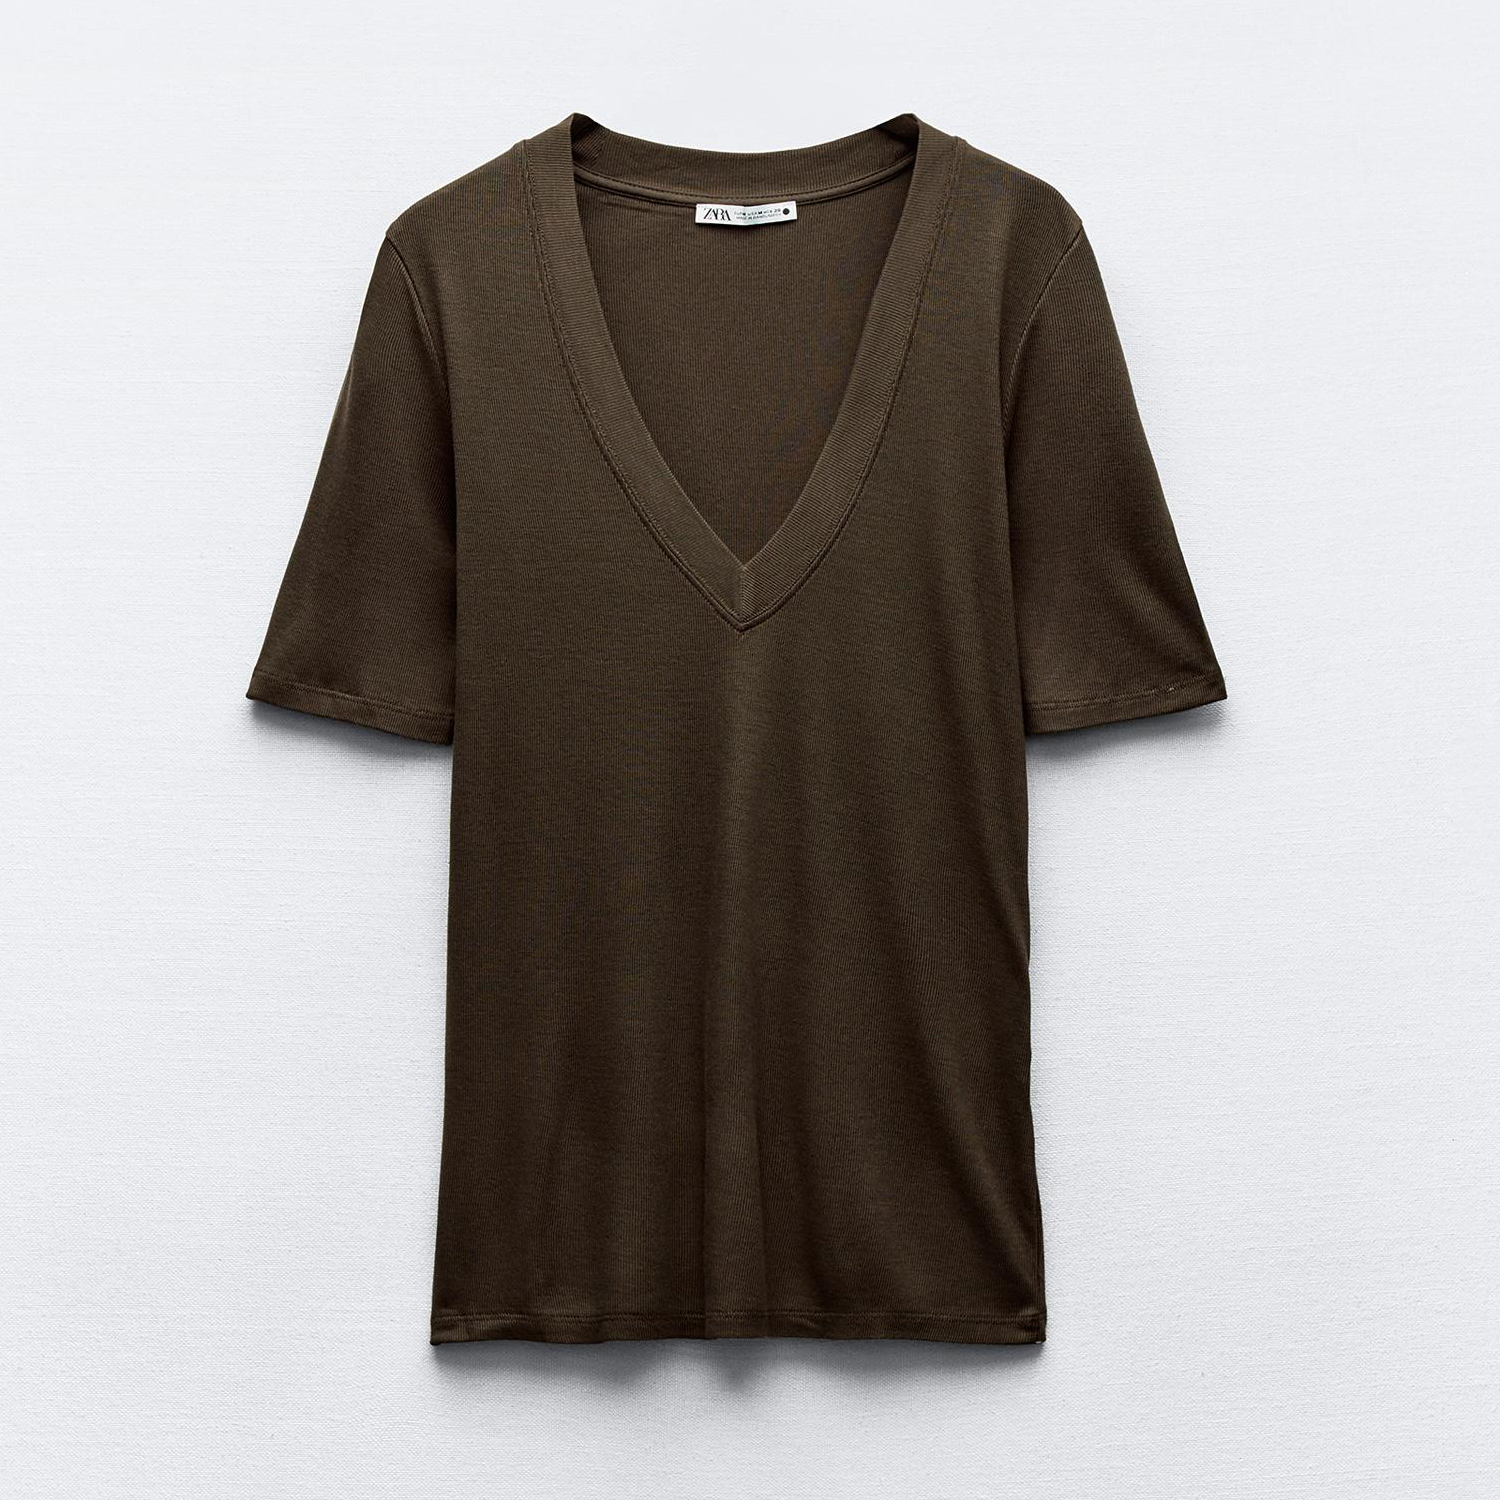 Футболка Zara Flowing V-Neck, коричневый футболка zara flowing v neck коричневый